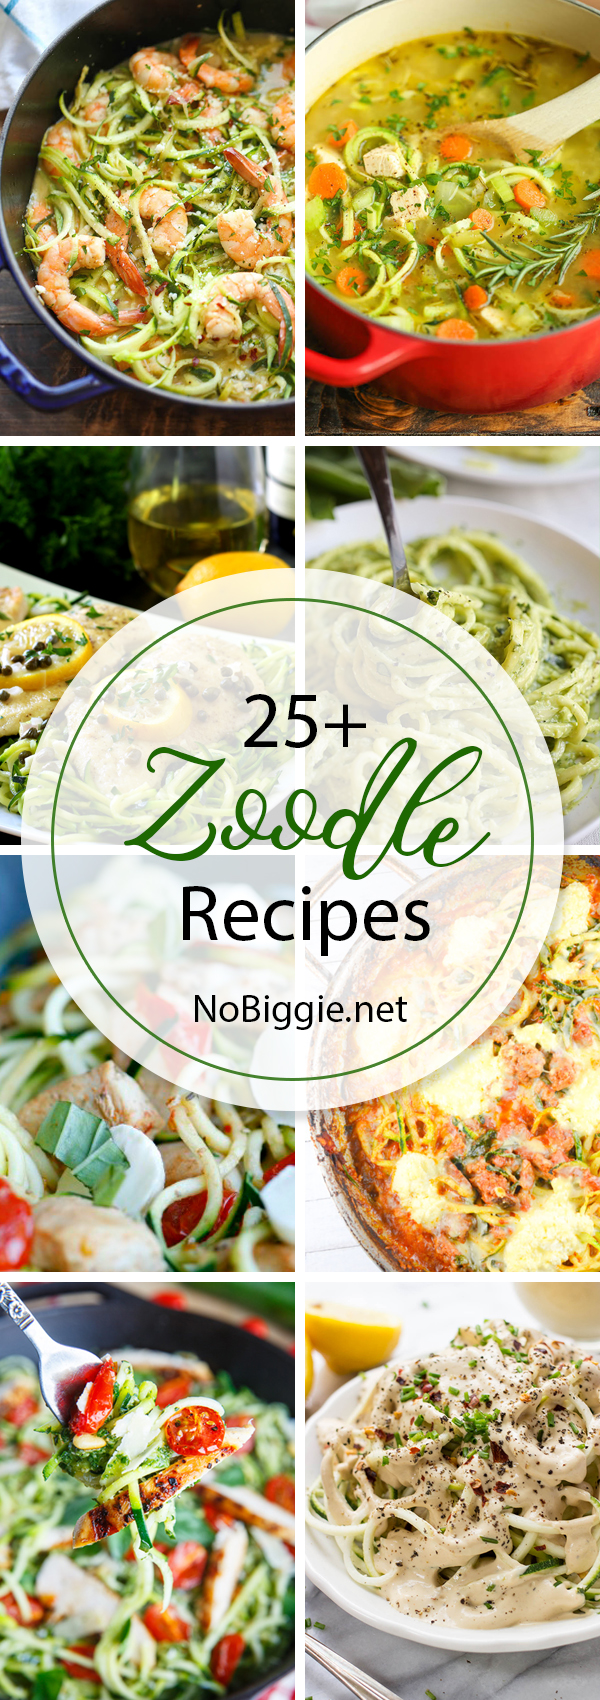 25+ zoodle recipes (zucchini noodles)